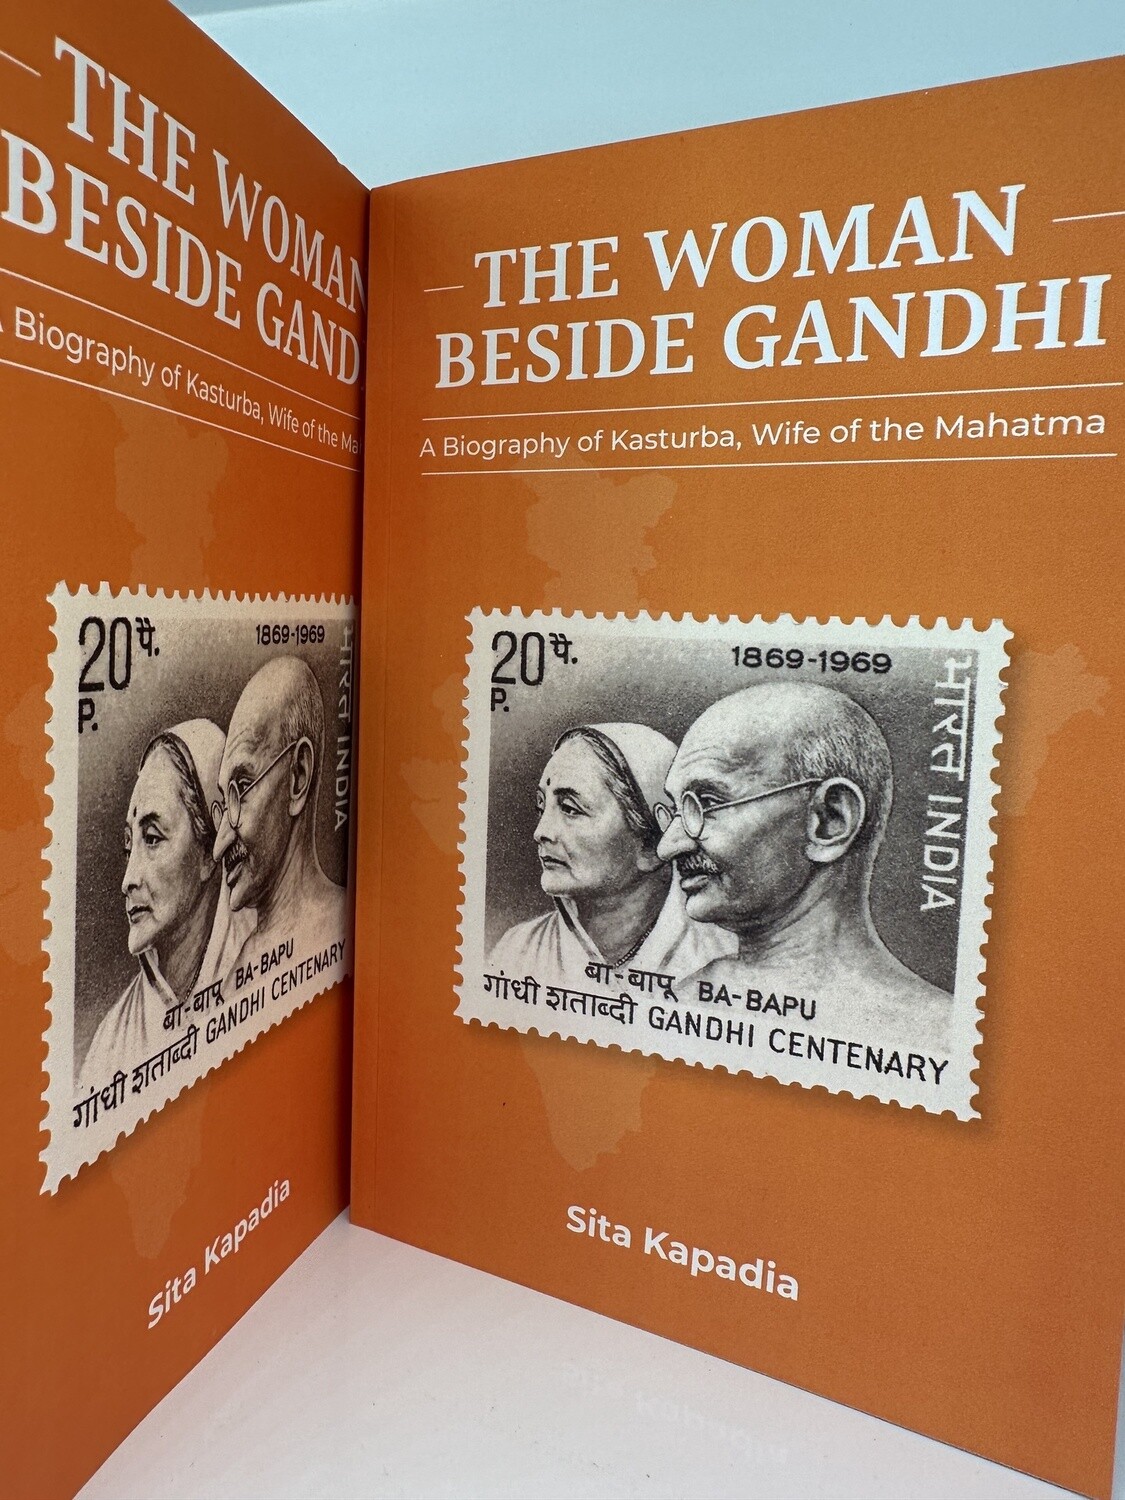 The Woman Beside Gandhi